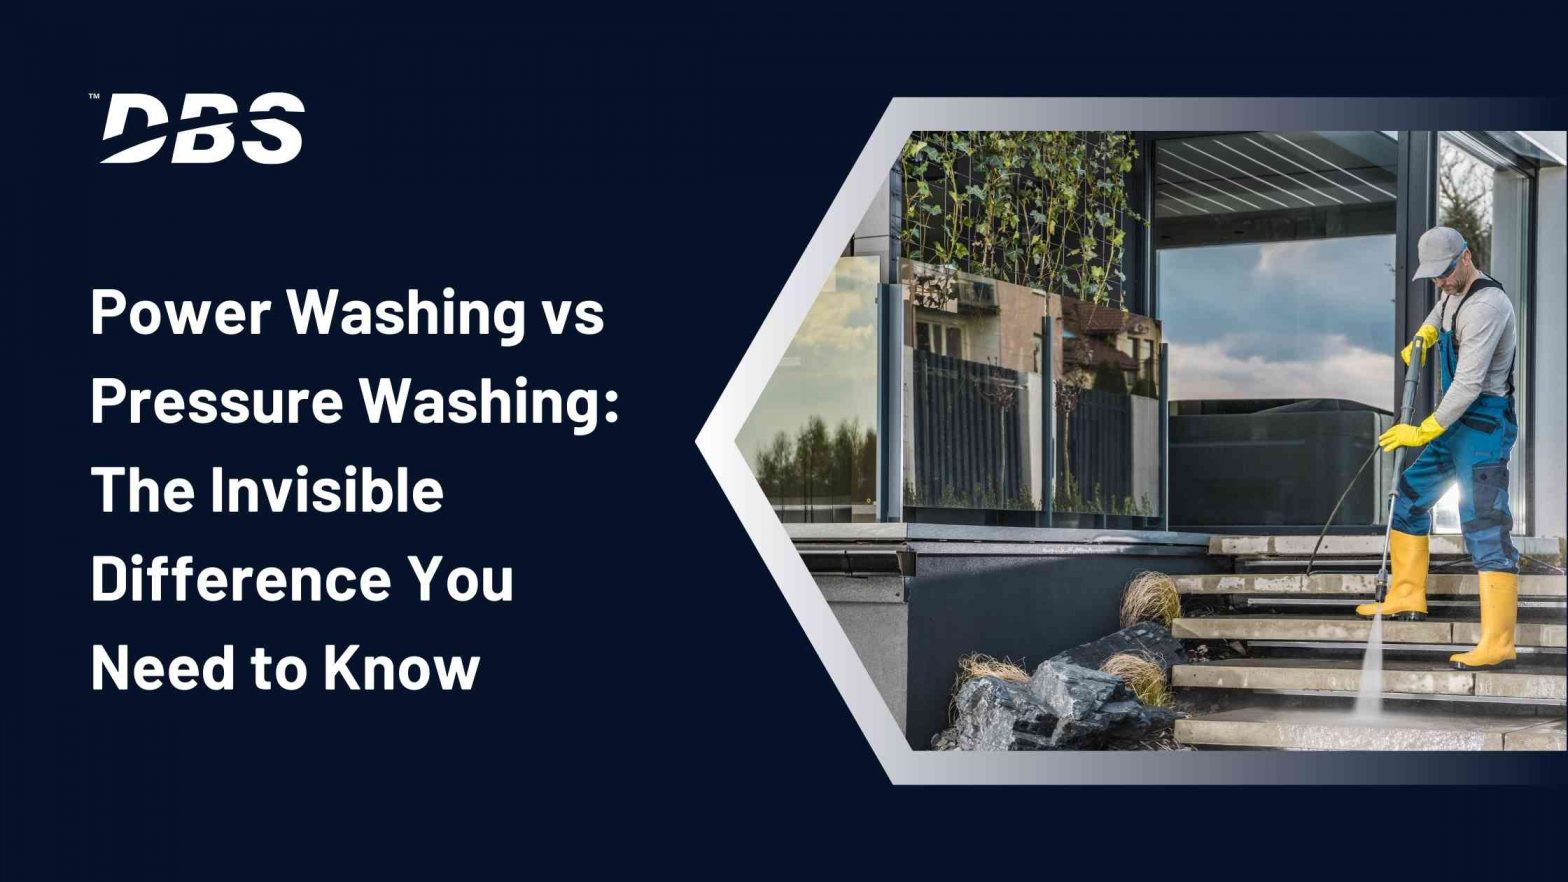 Power Washing vs Pressure Washing